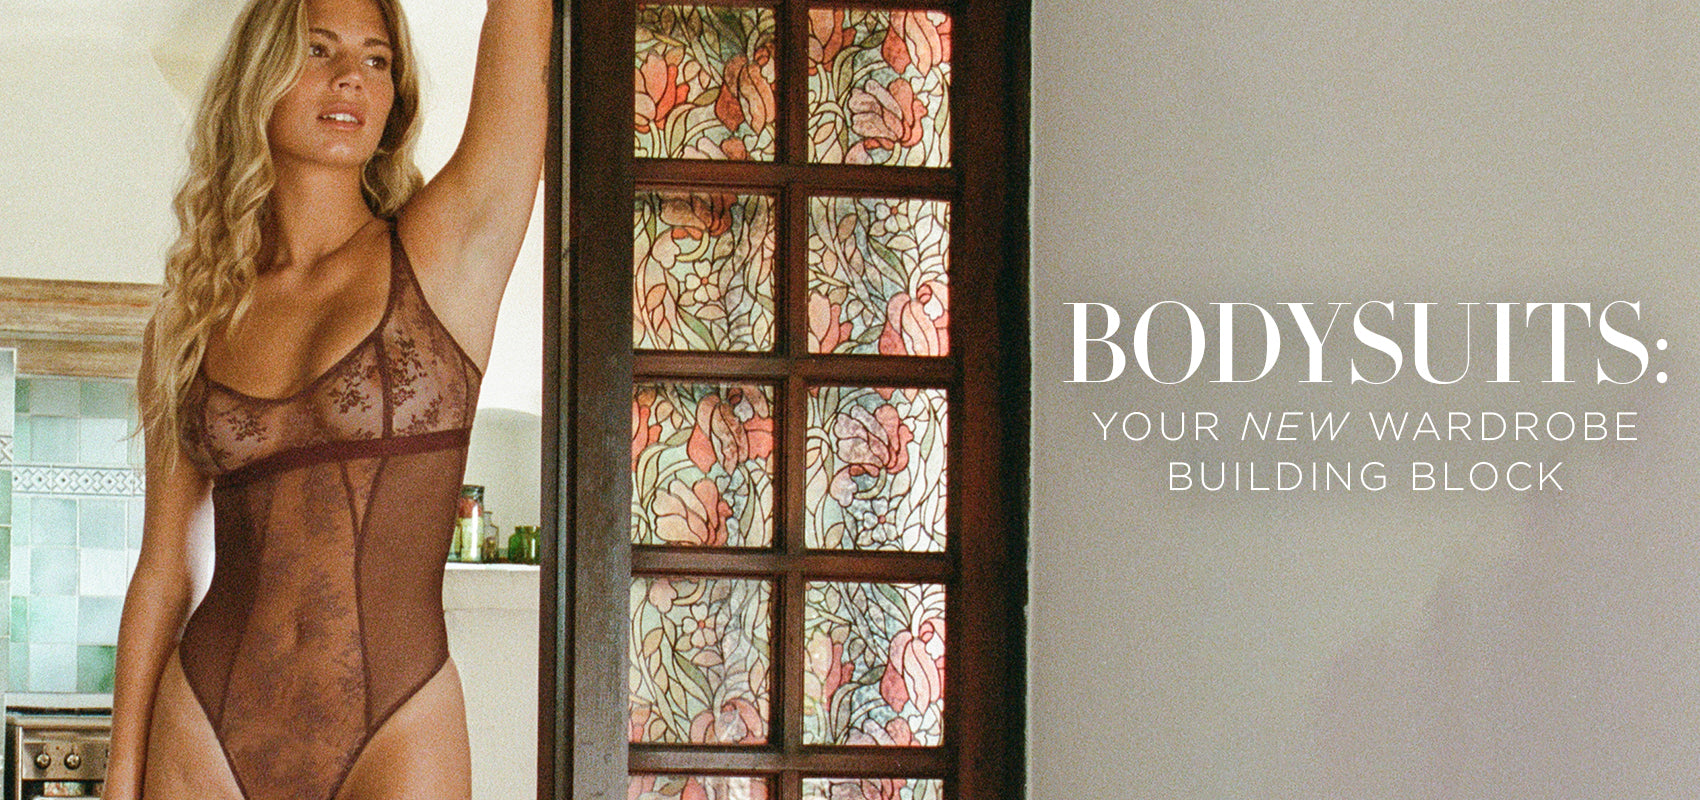 Bodysuits: Your New Wardrobe Building Block